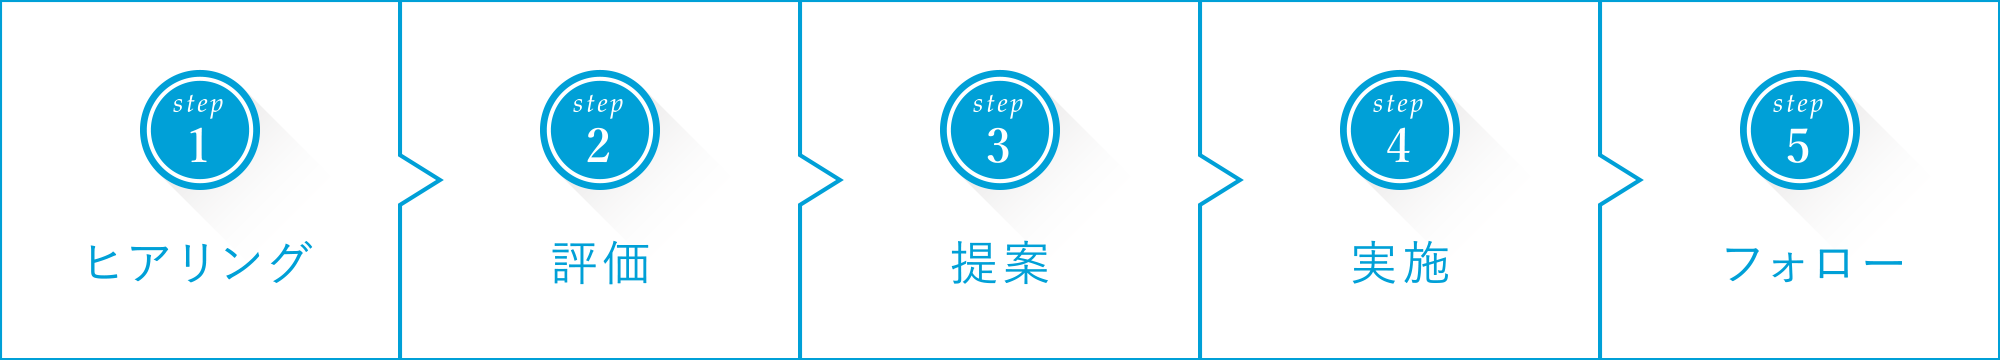 step1.ヒアリング step2.評価 step3.提案 step4.実施 step5.フォロー